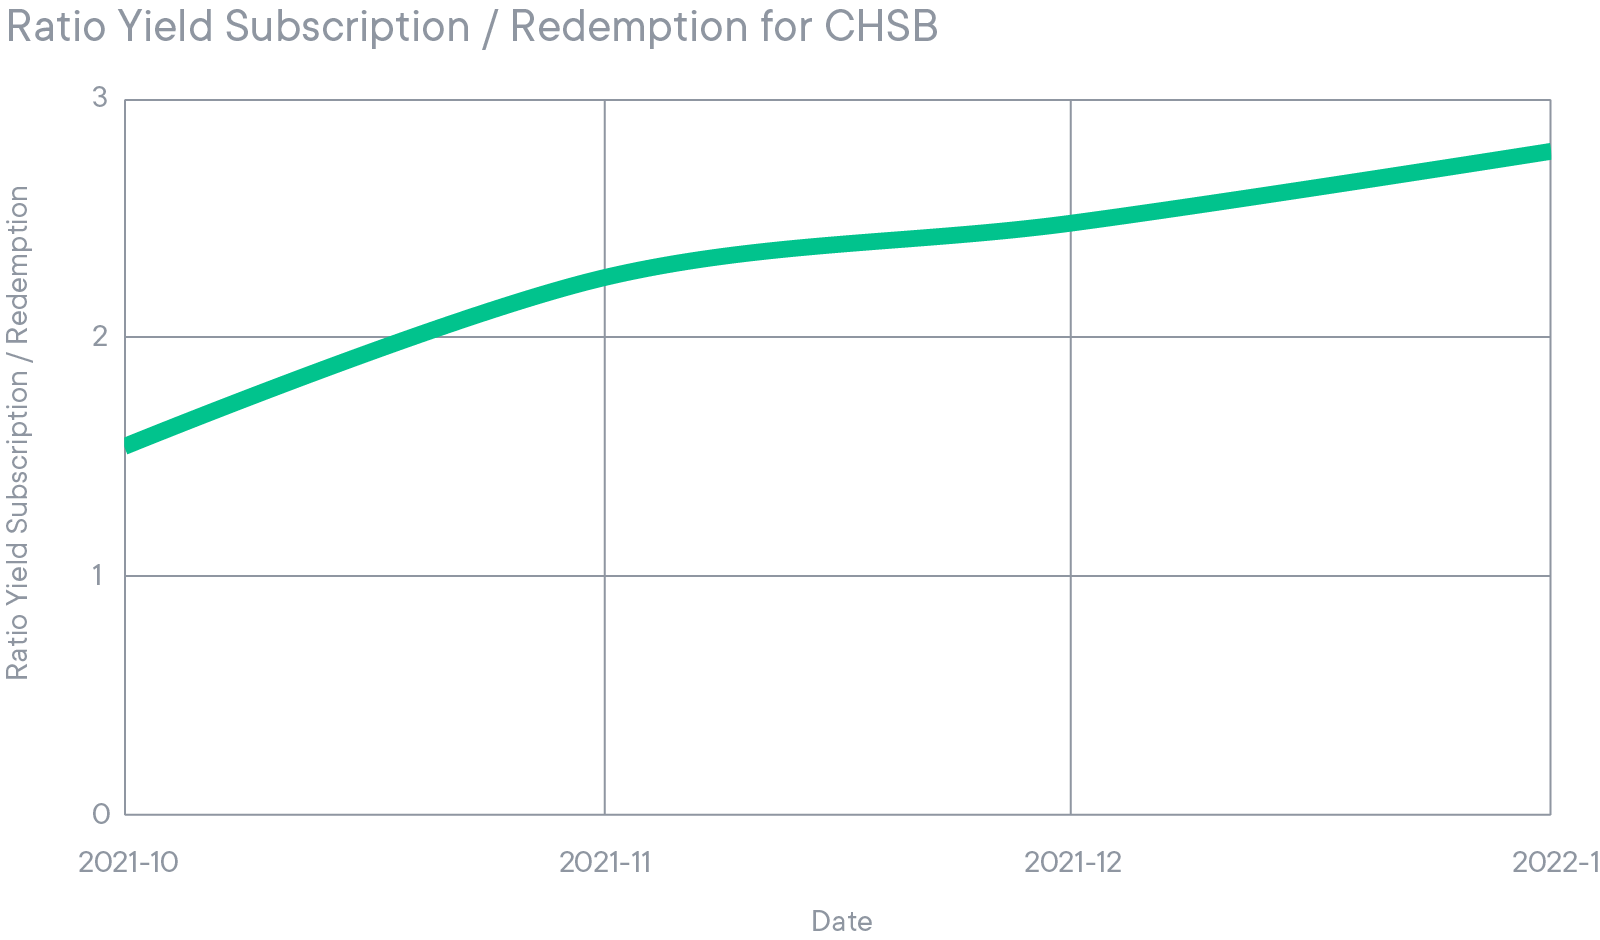  Ratio Souscriptions / Retraits CHSB Yield